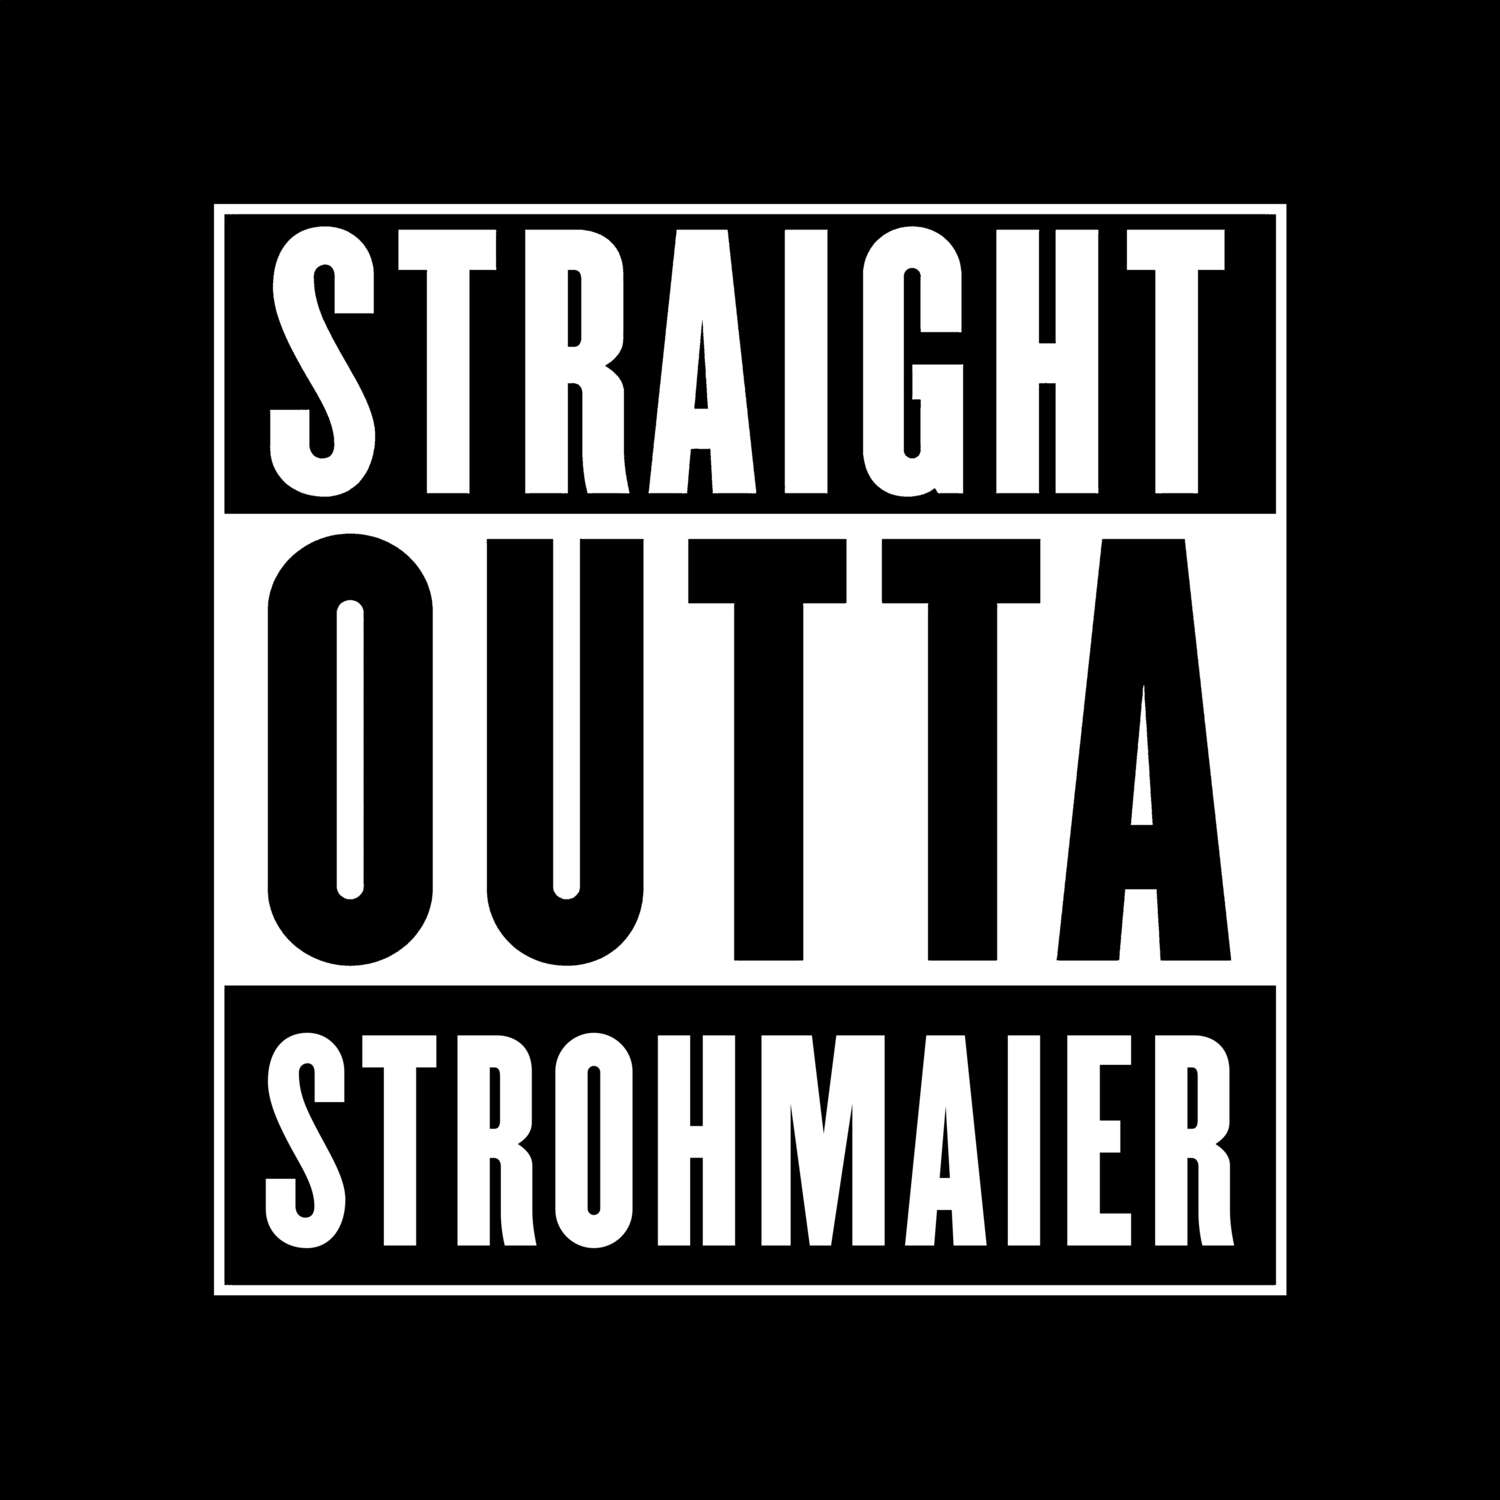 Strohmaier T-Shirt »Straight Outta«